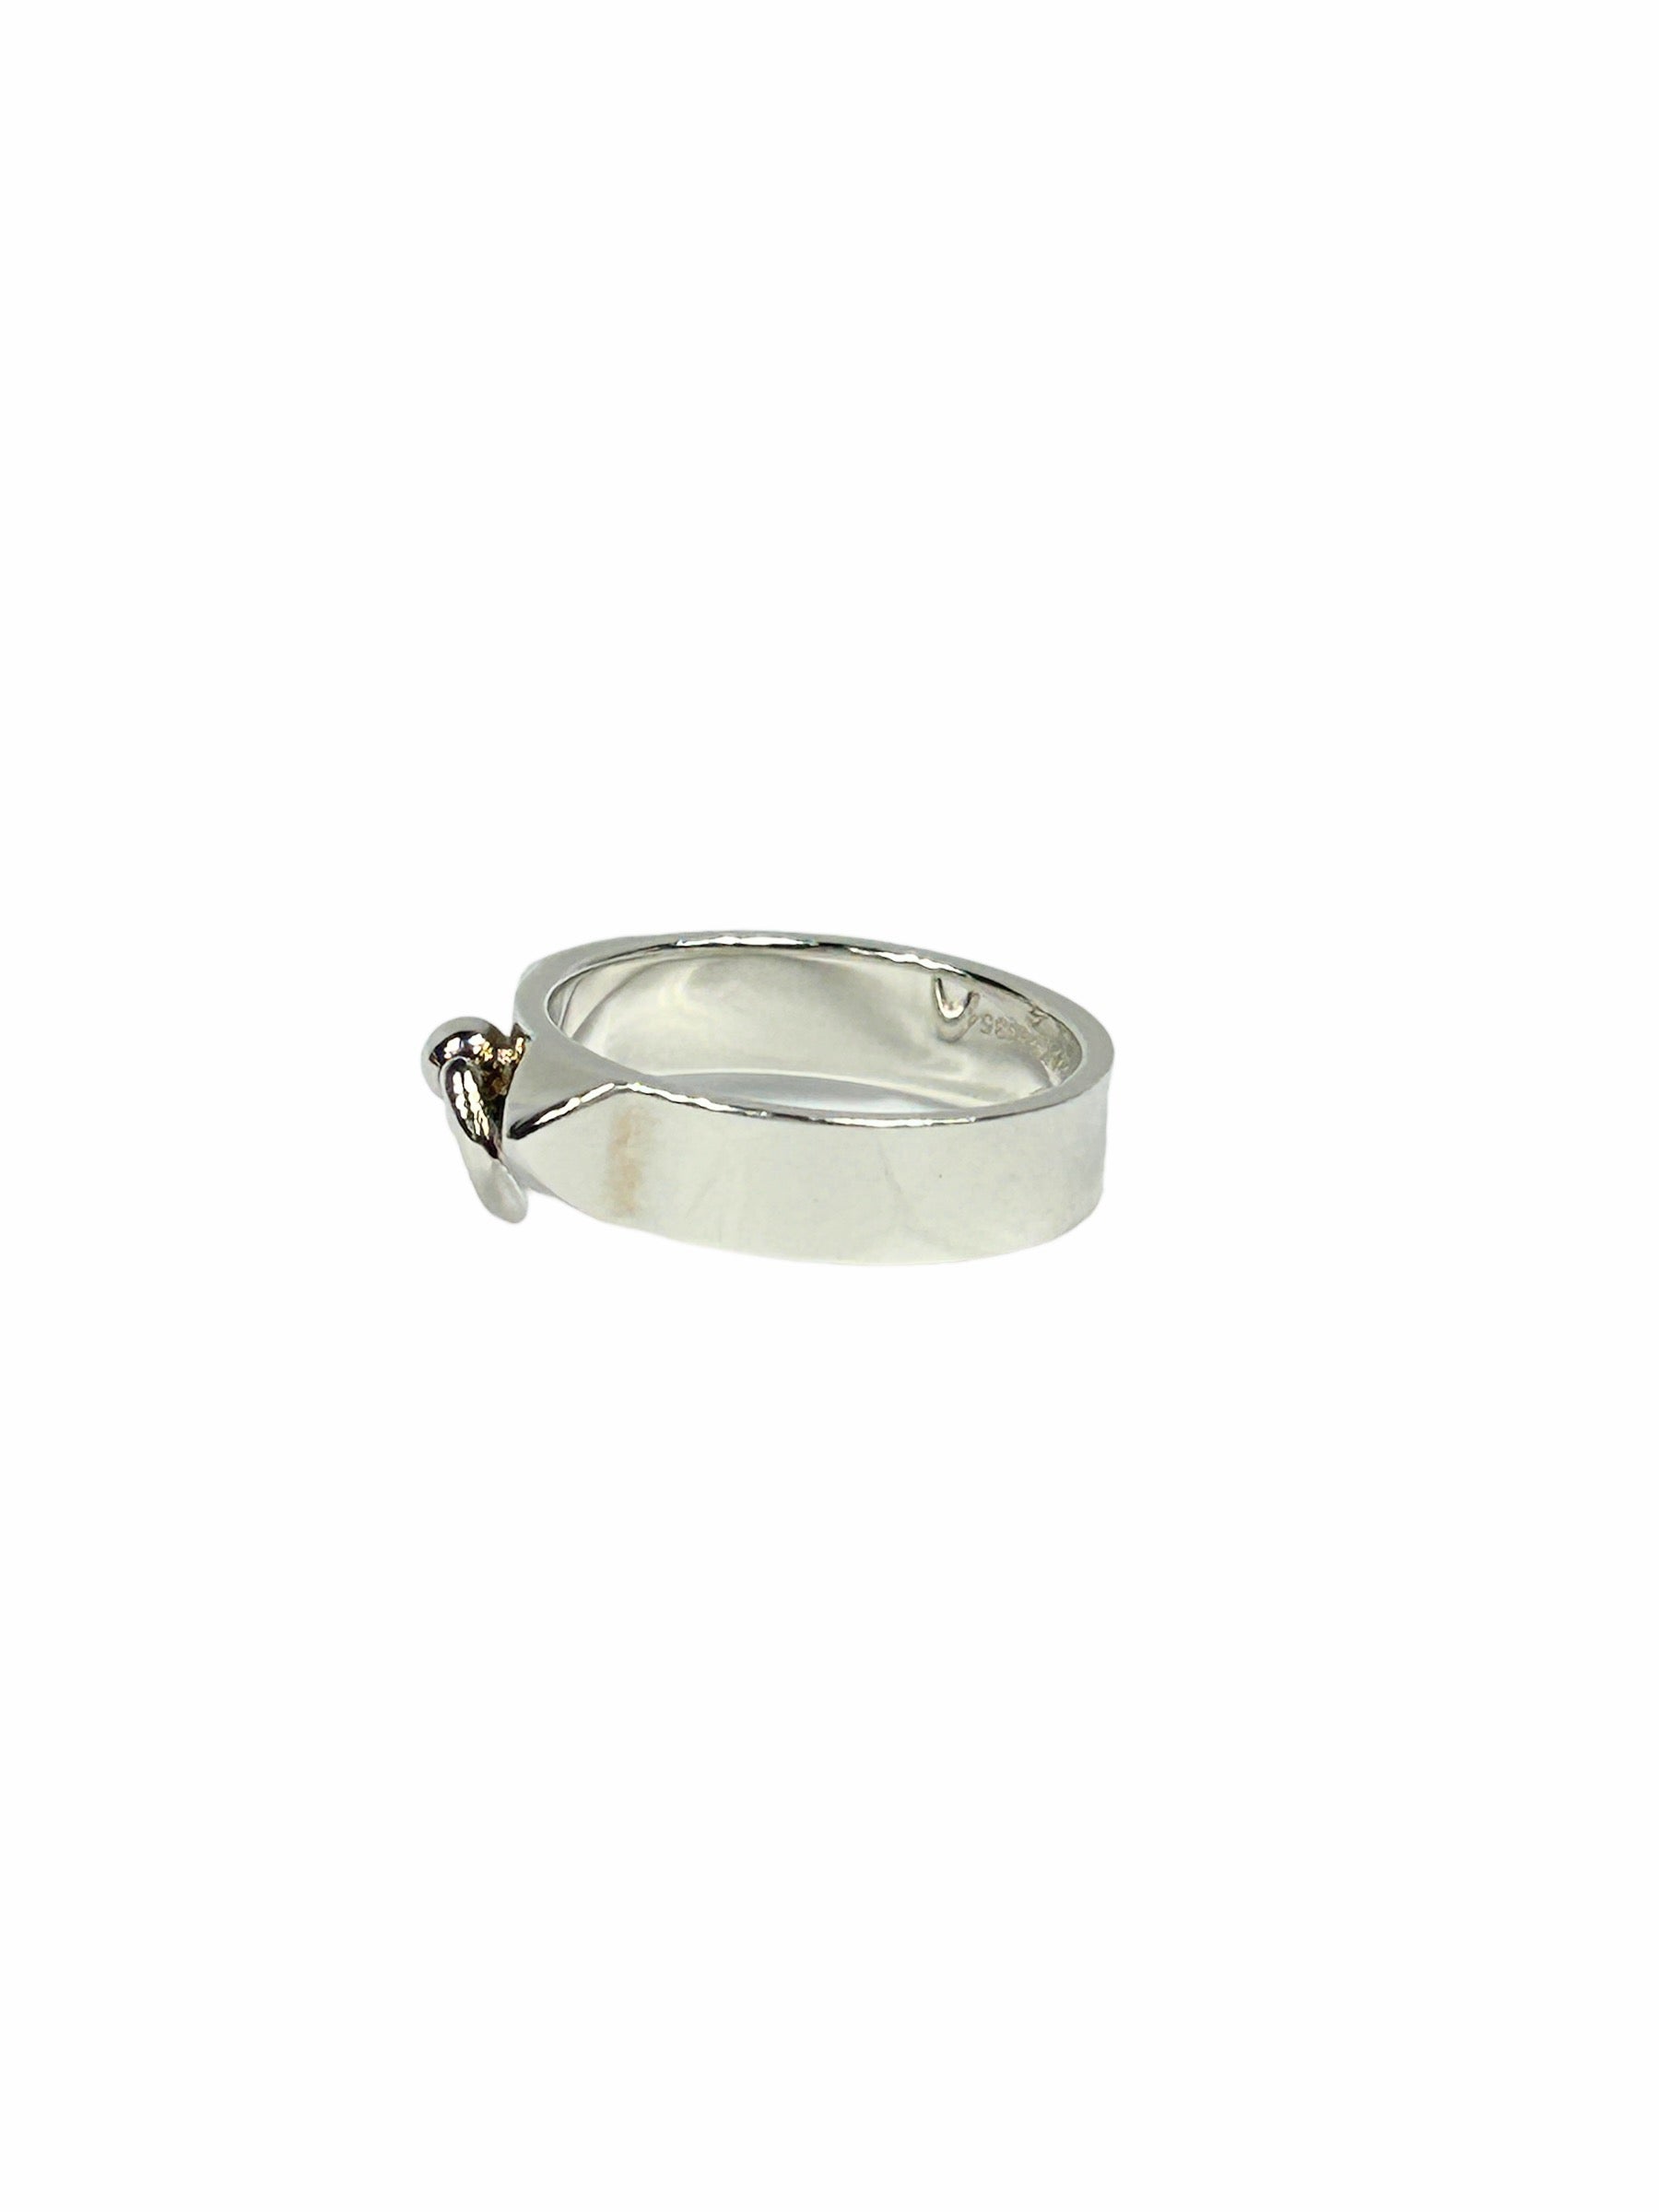 Silver Collier de Chien PM Ring